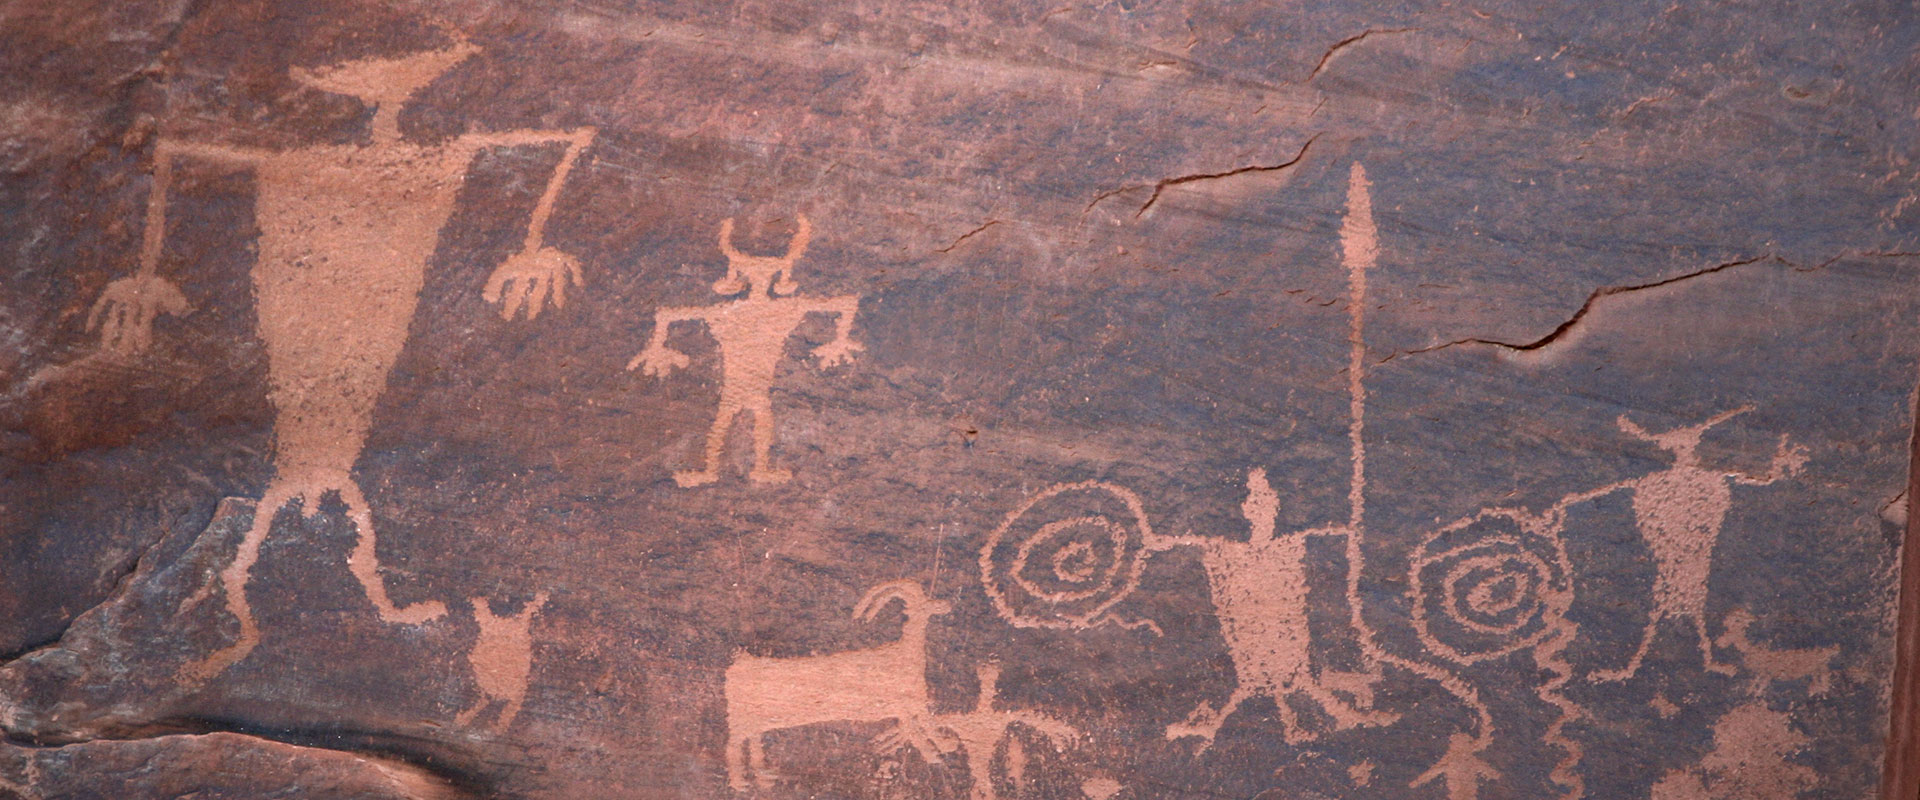 Petroglyphs and Rock Art Sites — Discover Moab, Utah